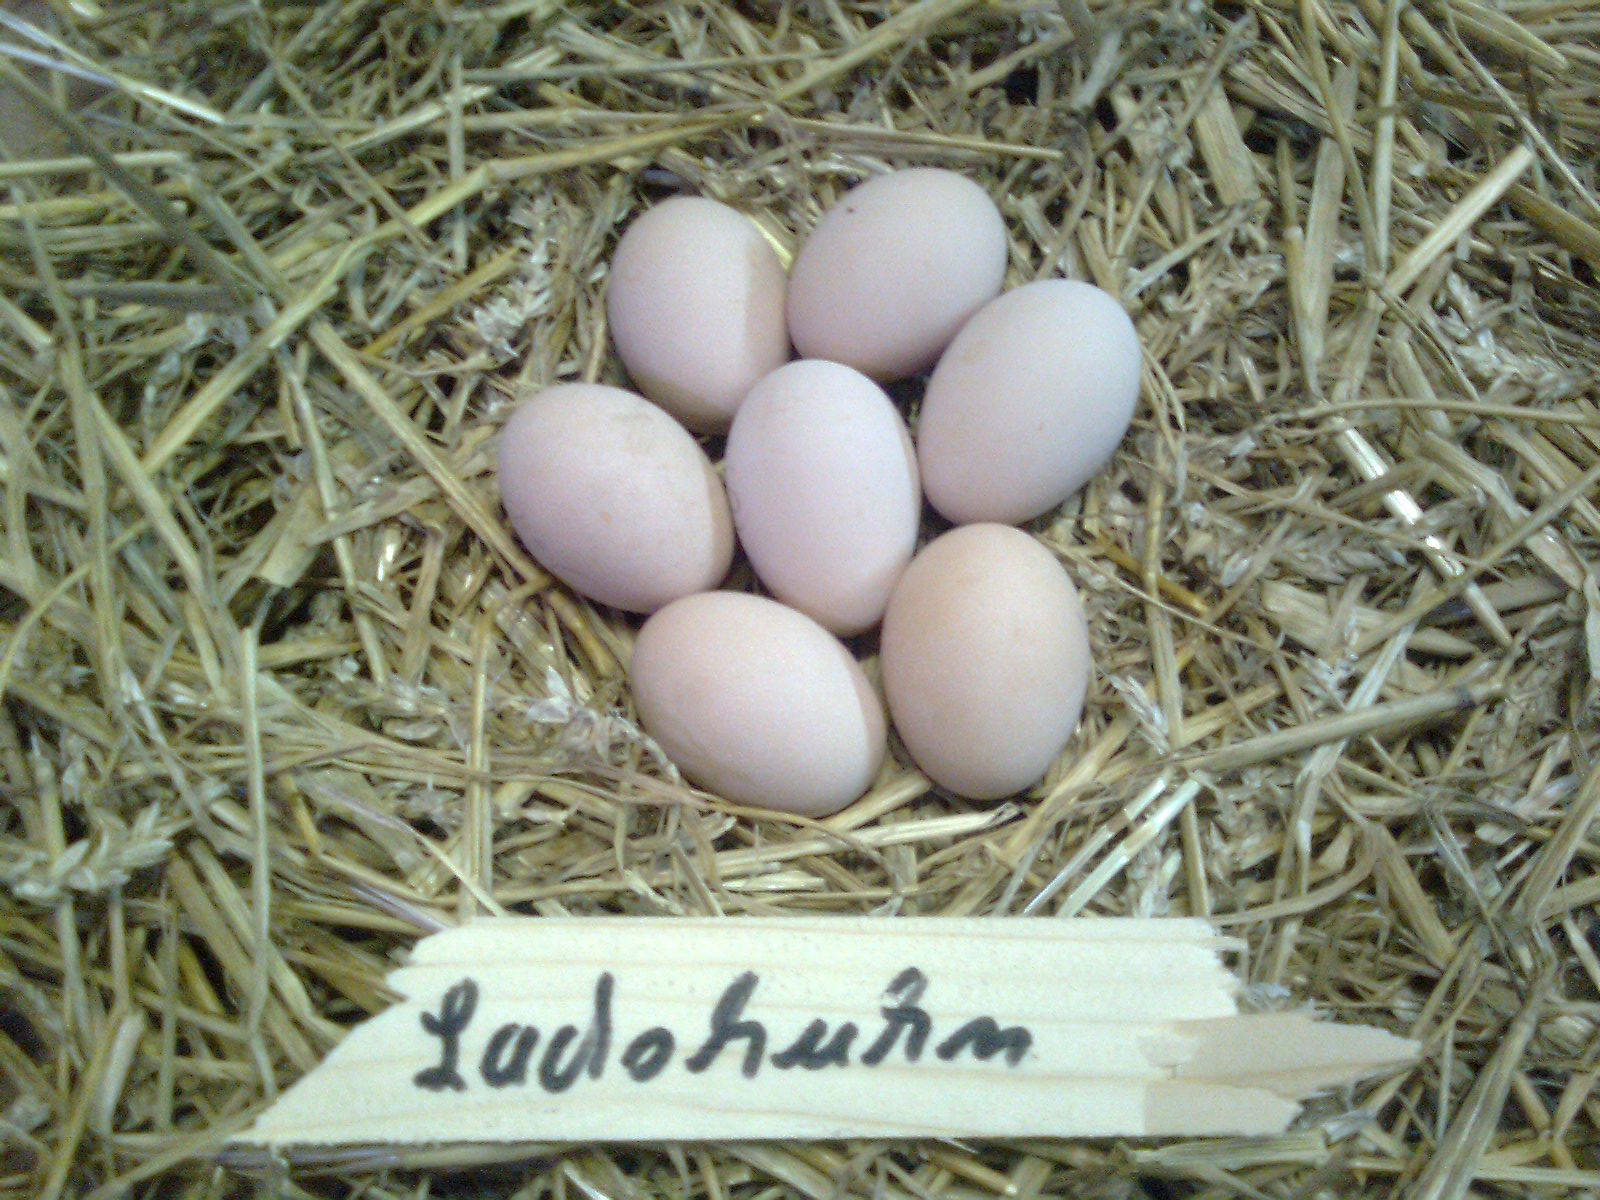 Lachshuhn-Eier ca. 55-65g schwer, Brutdauer 21-22 Tage